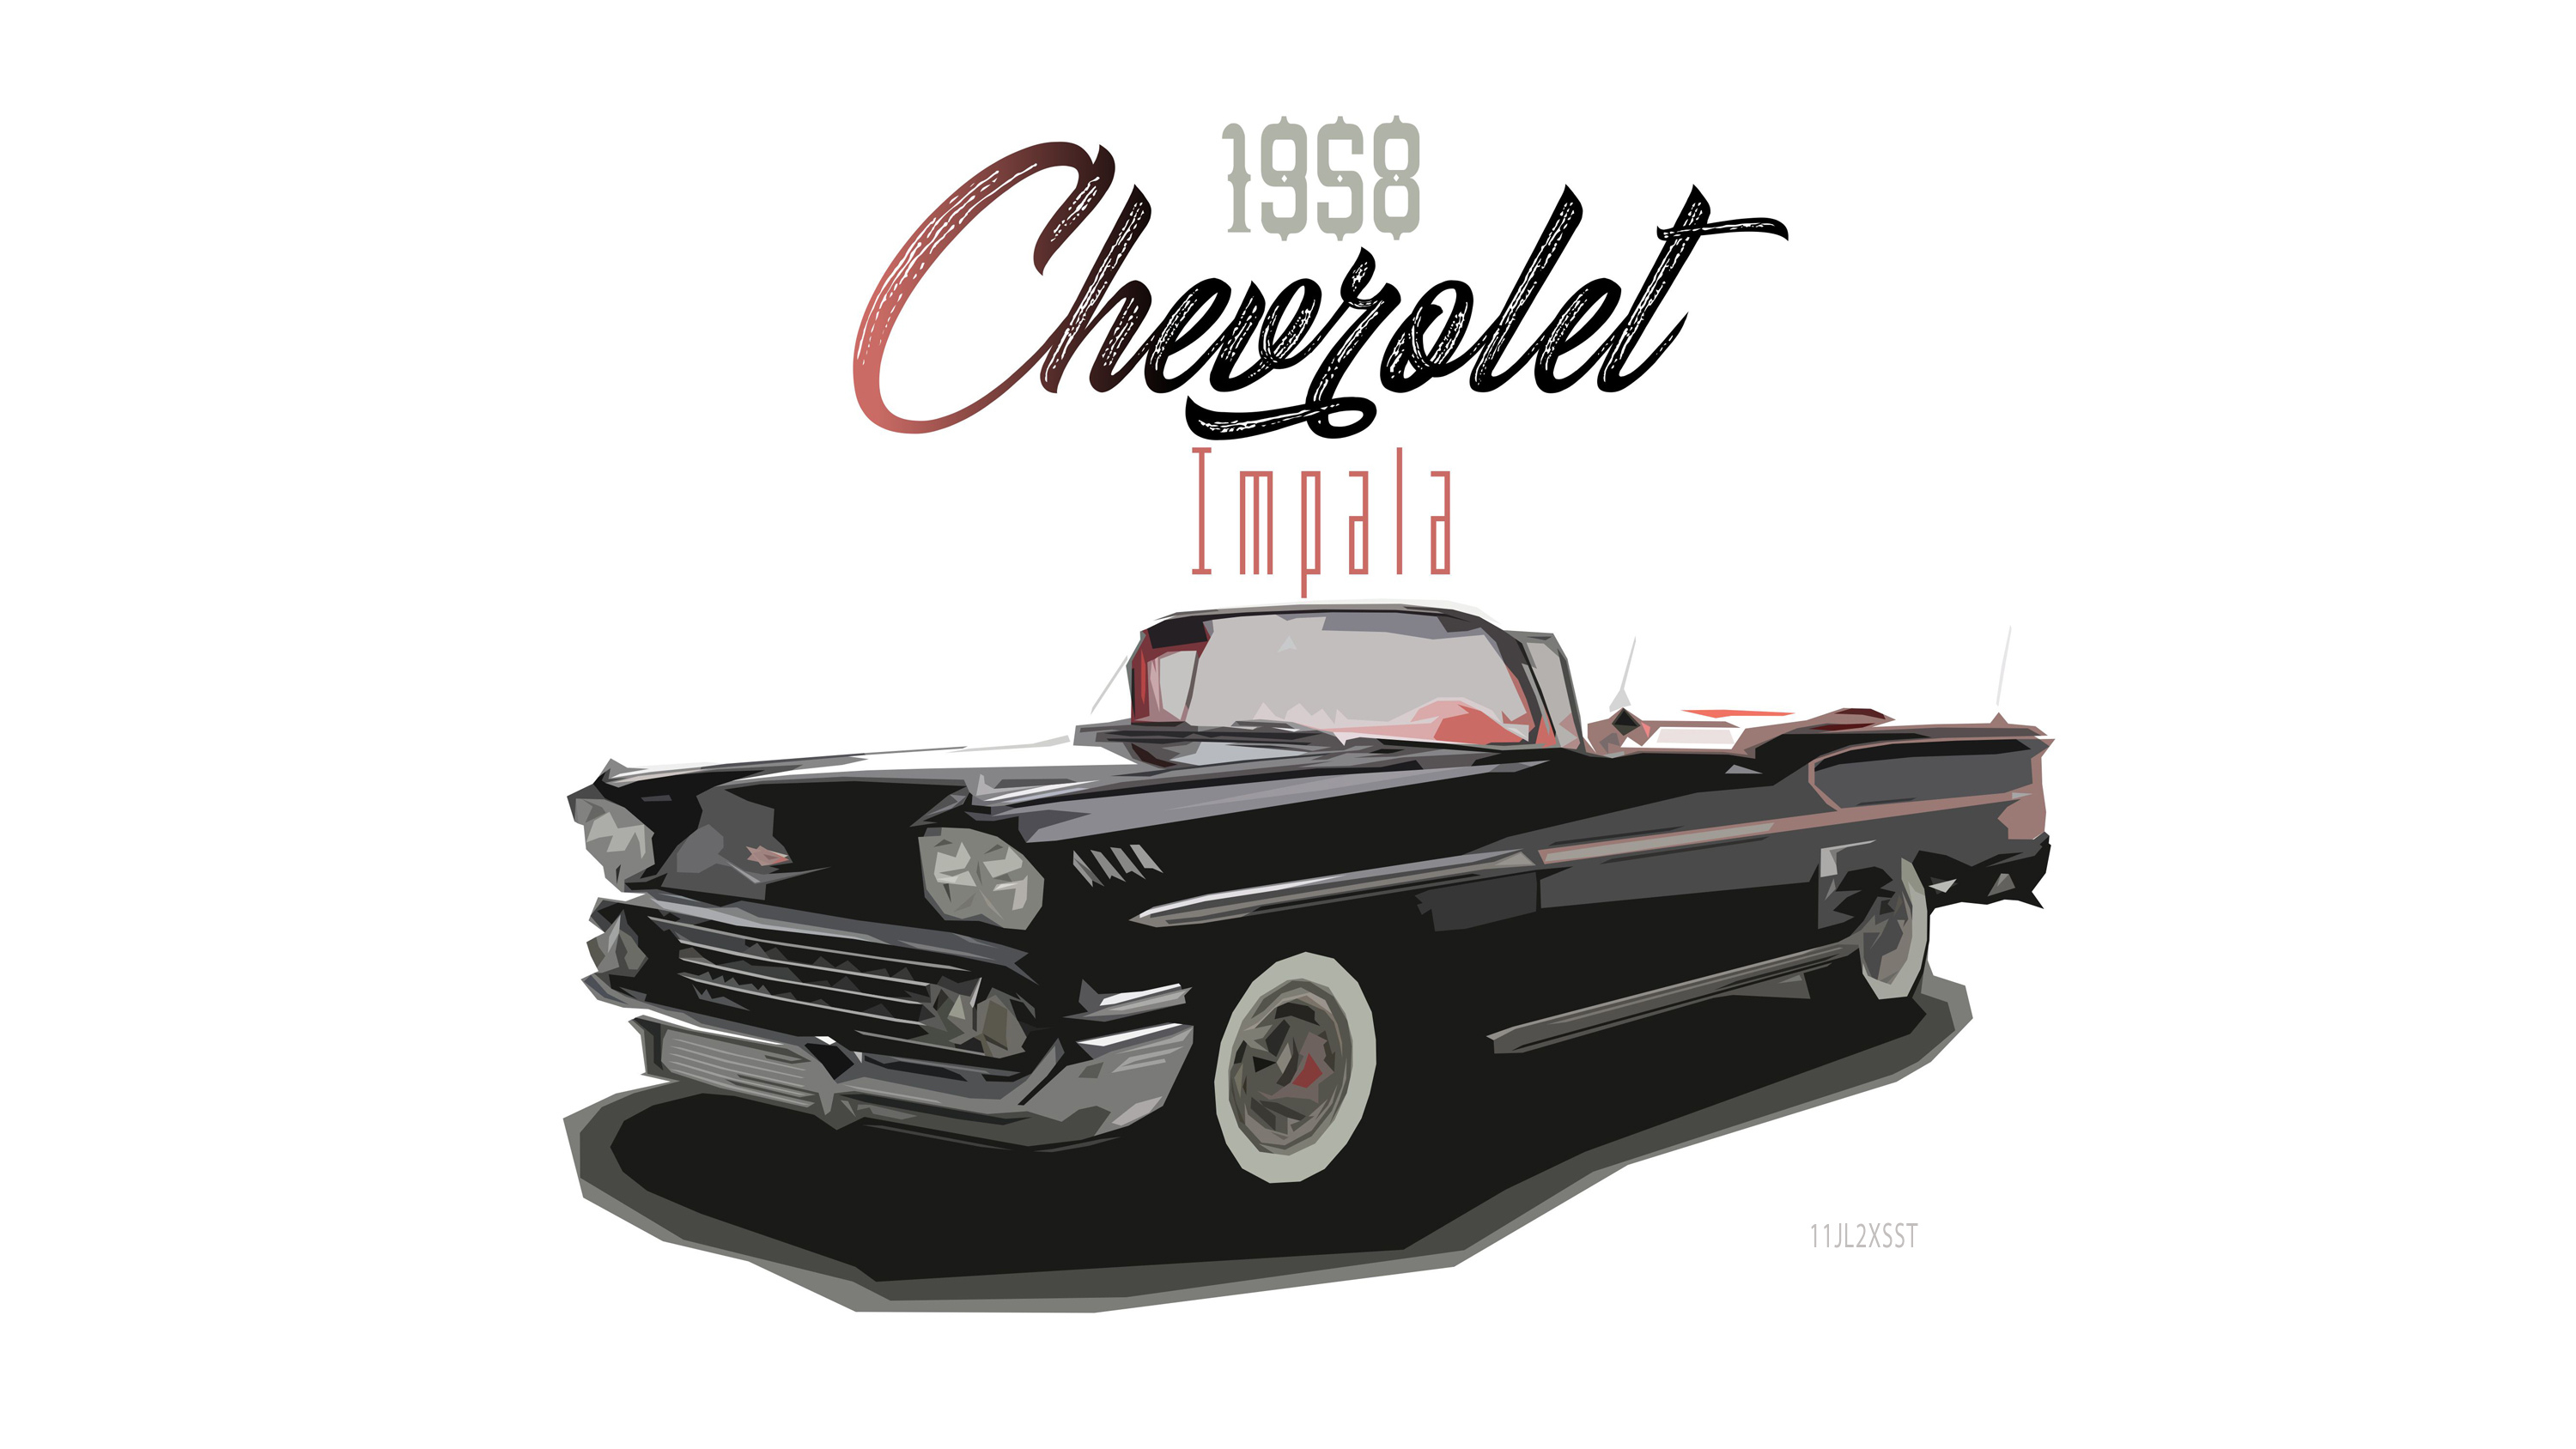 vintage car, vehicles, chevrolet impala, car, chevrolet, classic car, retro